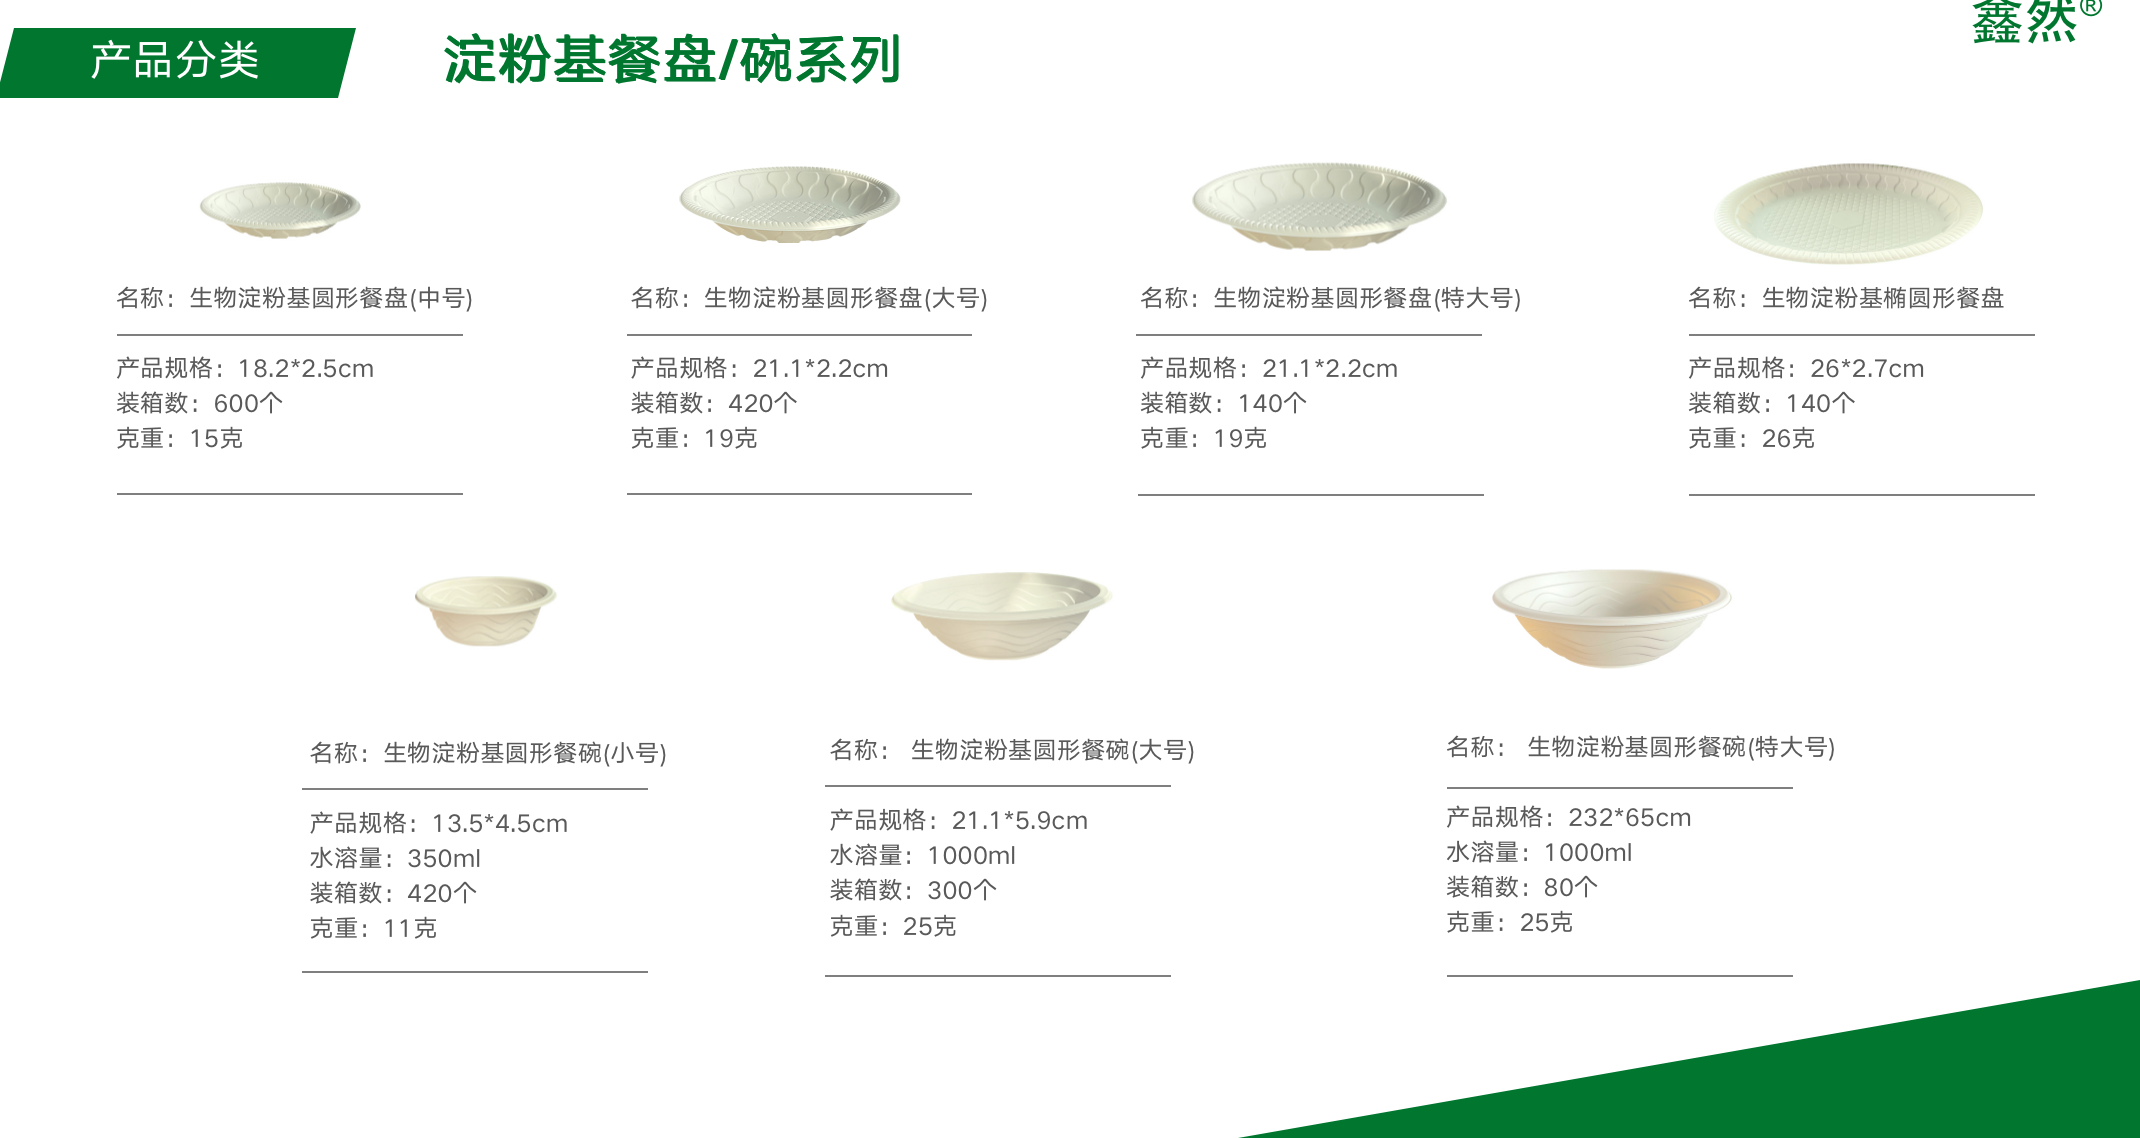 Xinran (Hebei) Biotechnology Co., Ltd